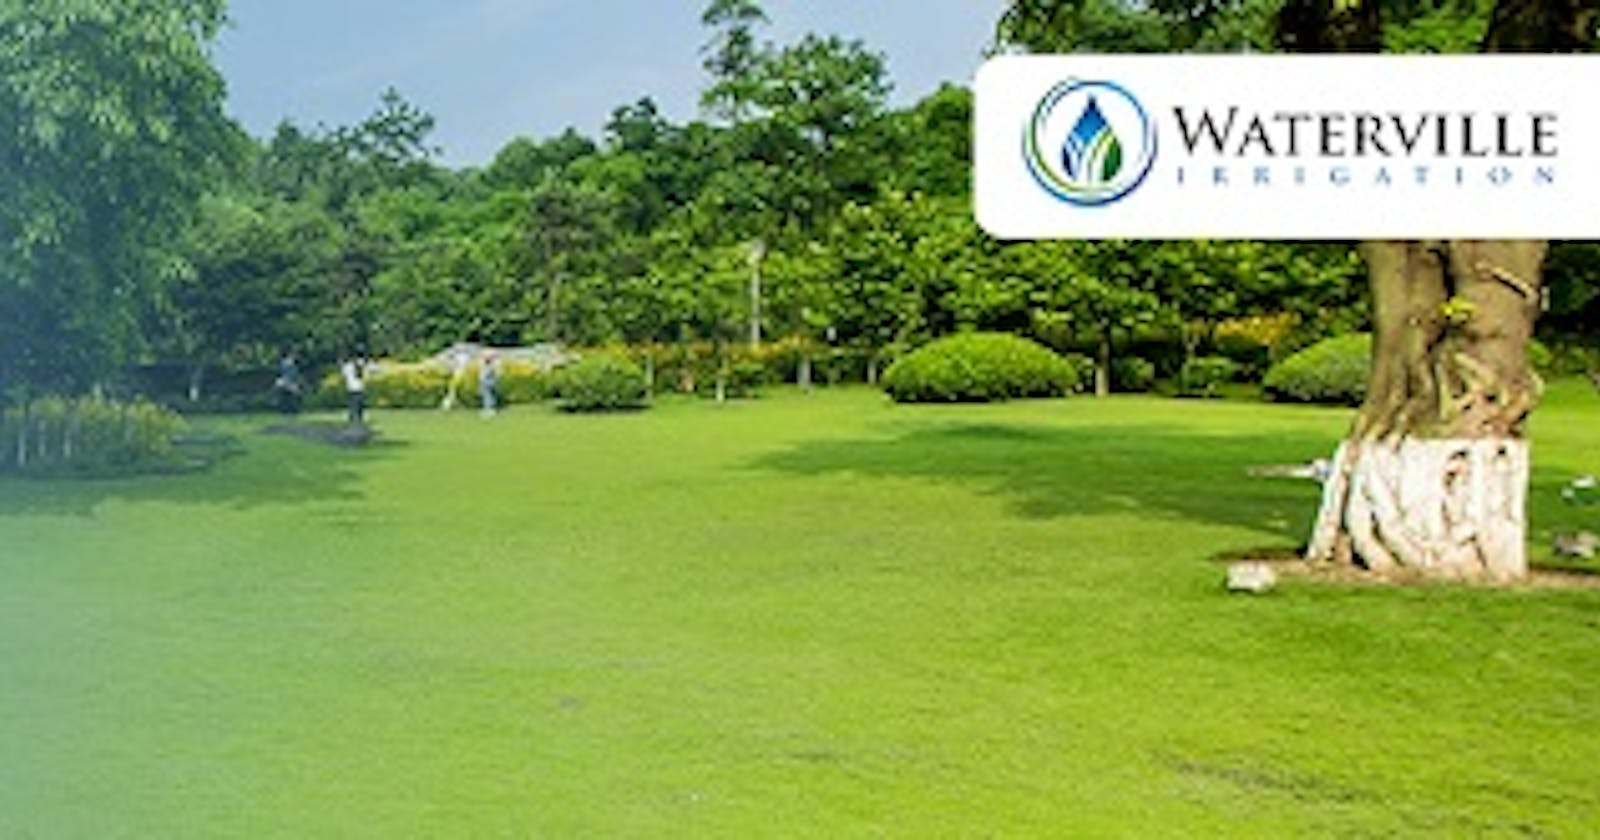 Waterville: Affordable Irrigation and Sprinkler System